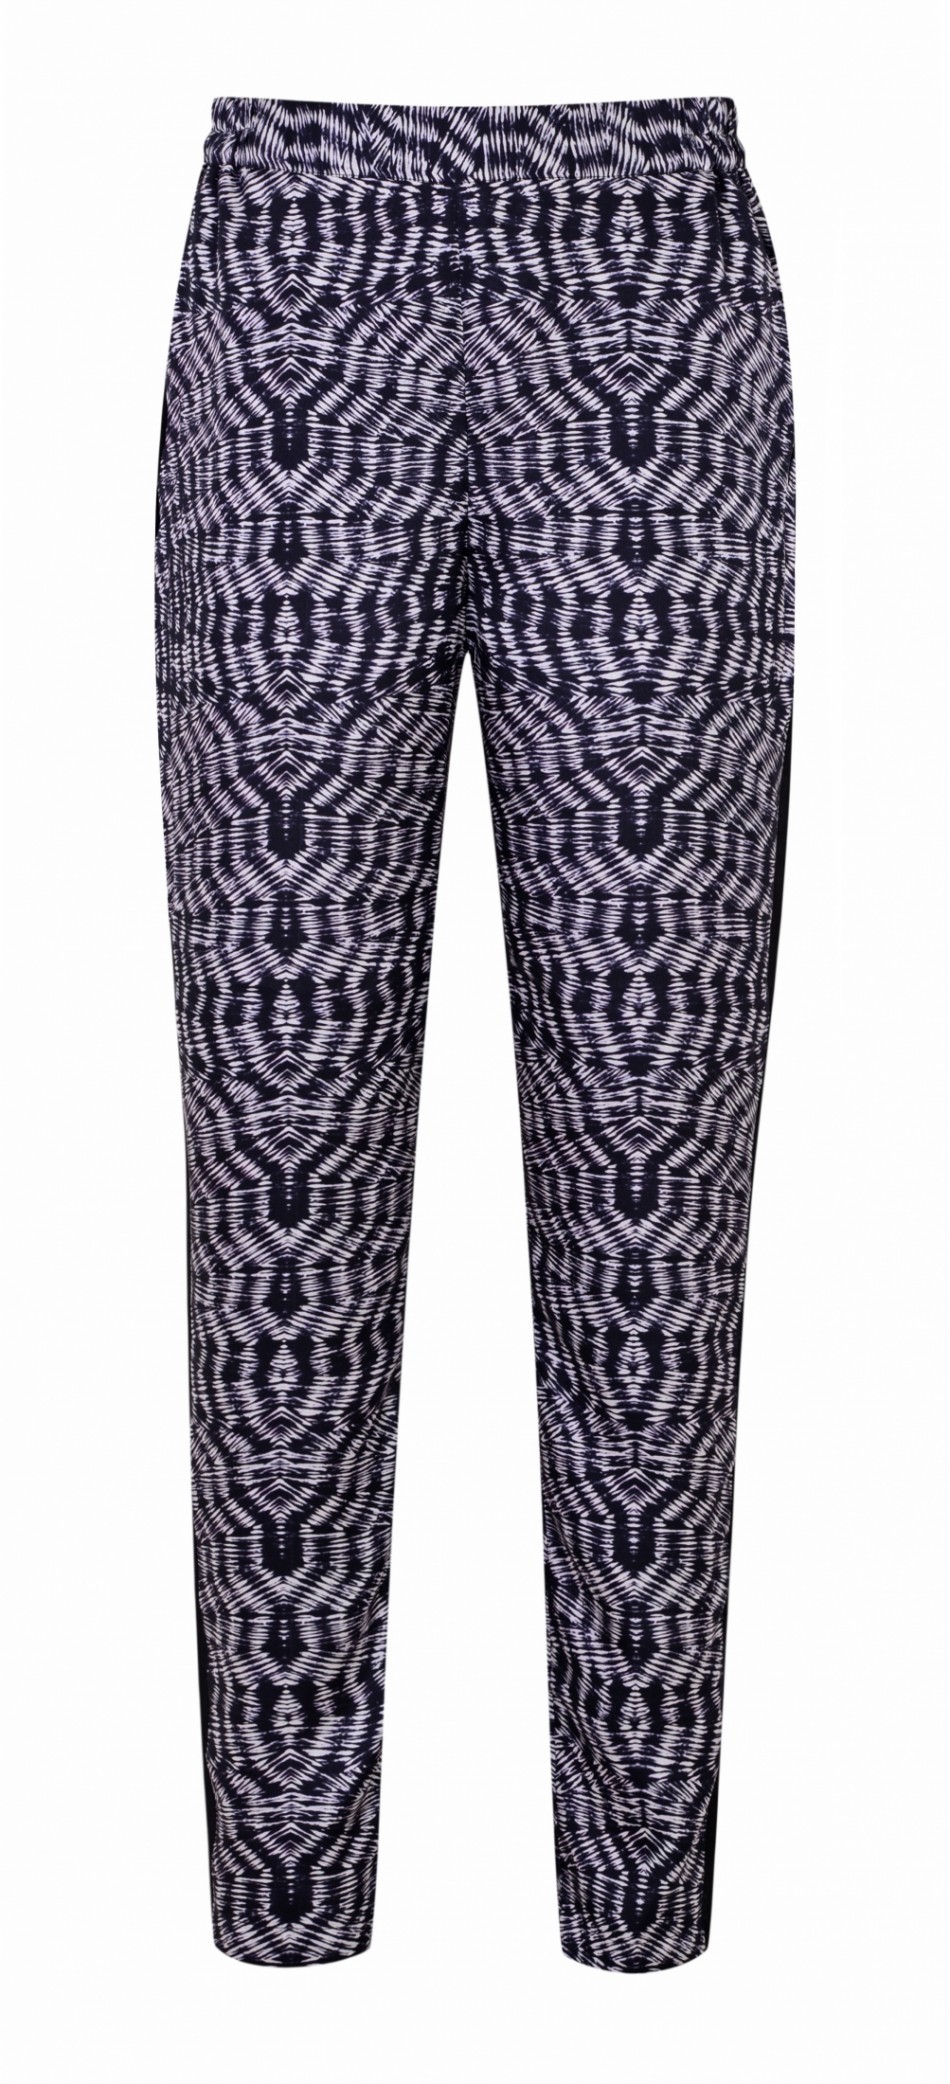 Anosha Trousers – Blue/White Shibori or Black/White Shibori